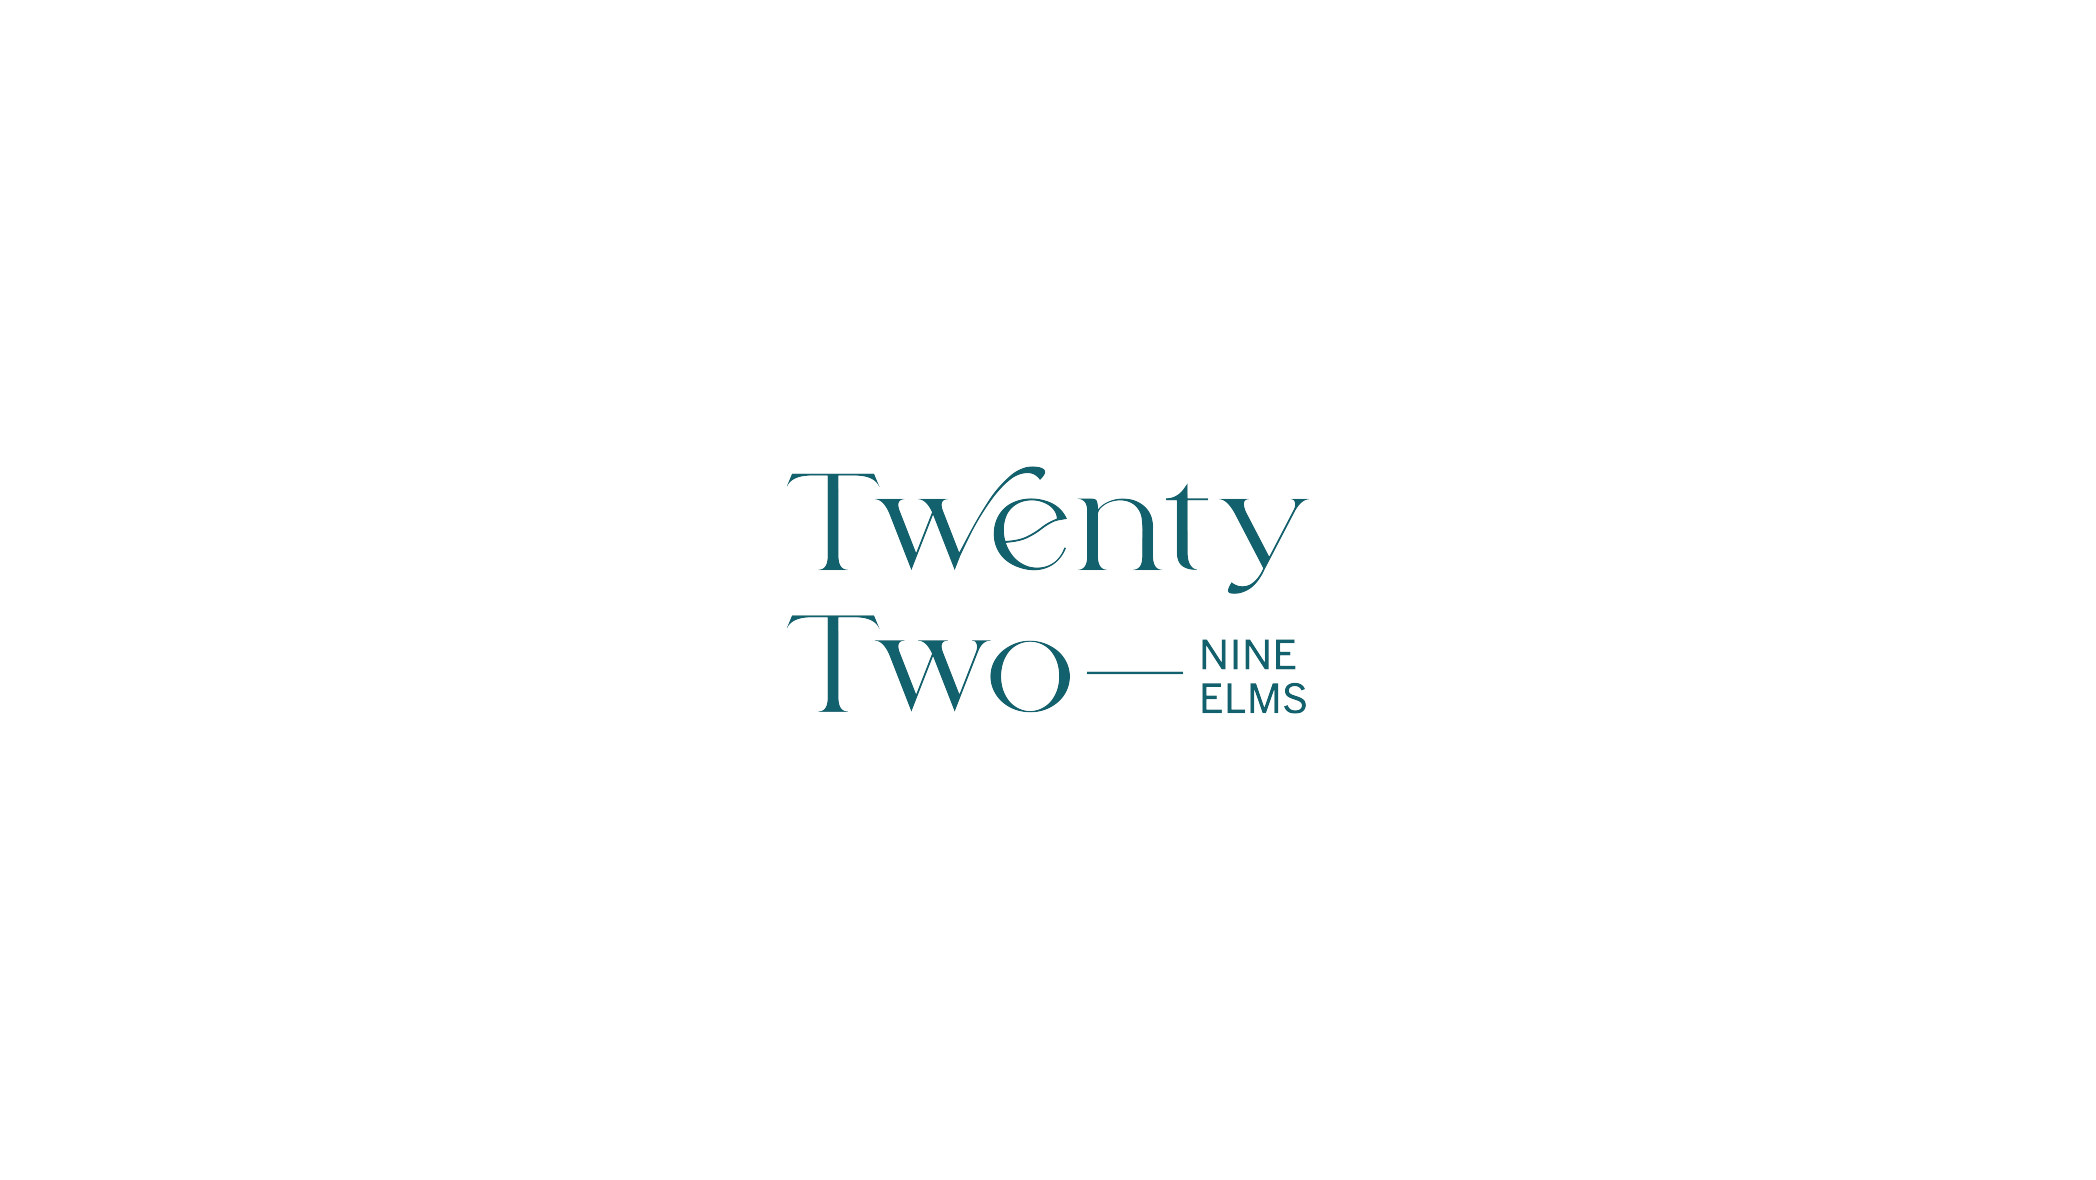 Twenty Two Nine Elms logo